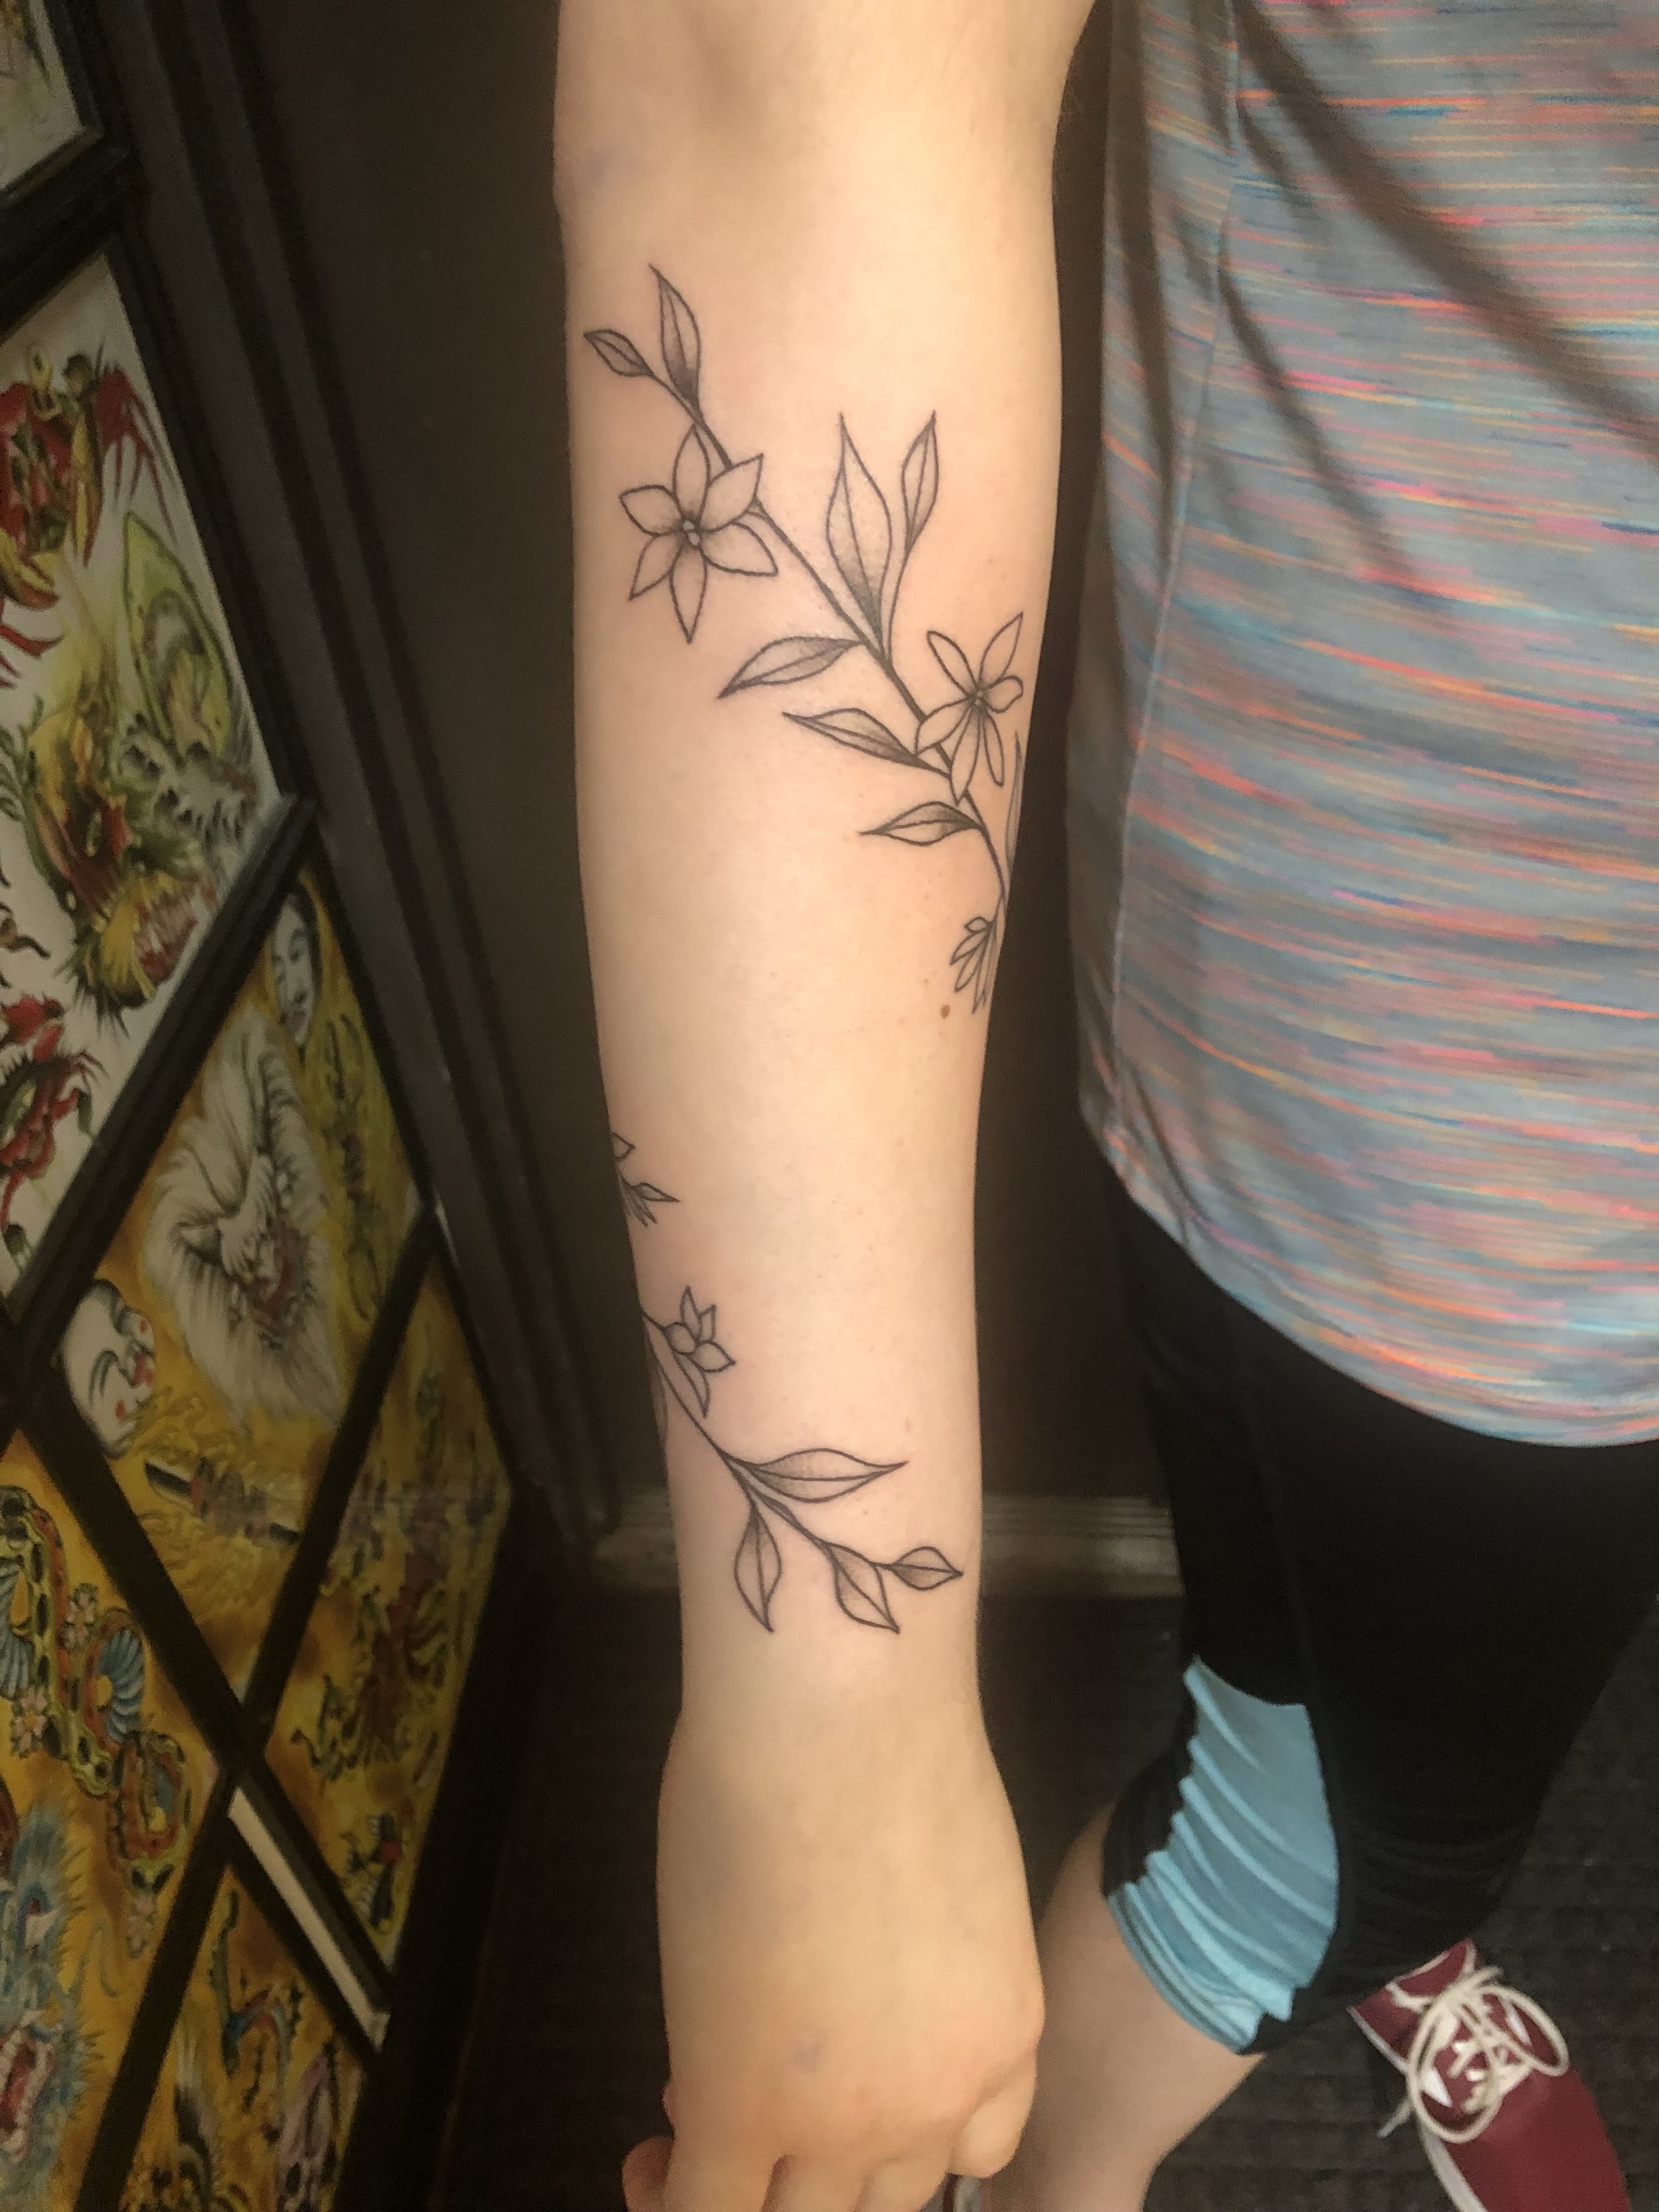 Azarja van der Veen on Twitter It was a day of ankle bands tattoo  tattoos tattooer ankleband laurel flowers vine lines blackandgrey  httpstcoxPeNNnydzk httpstcoZAfnyCeIdb  Twitter